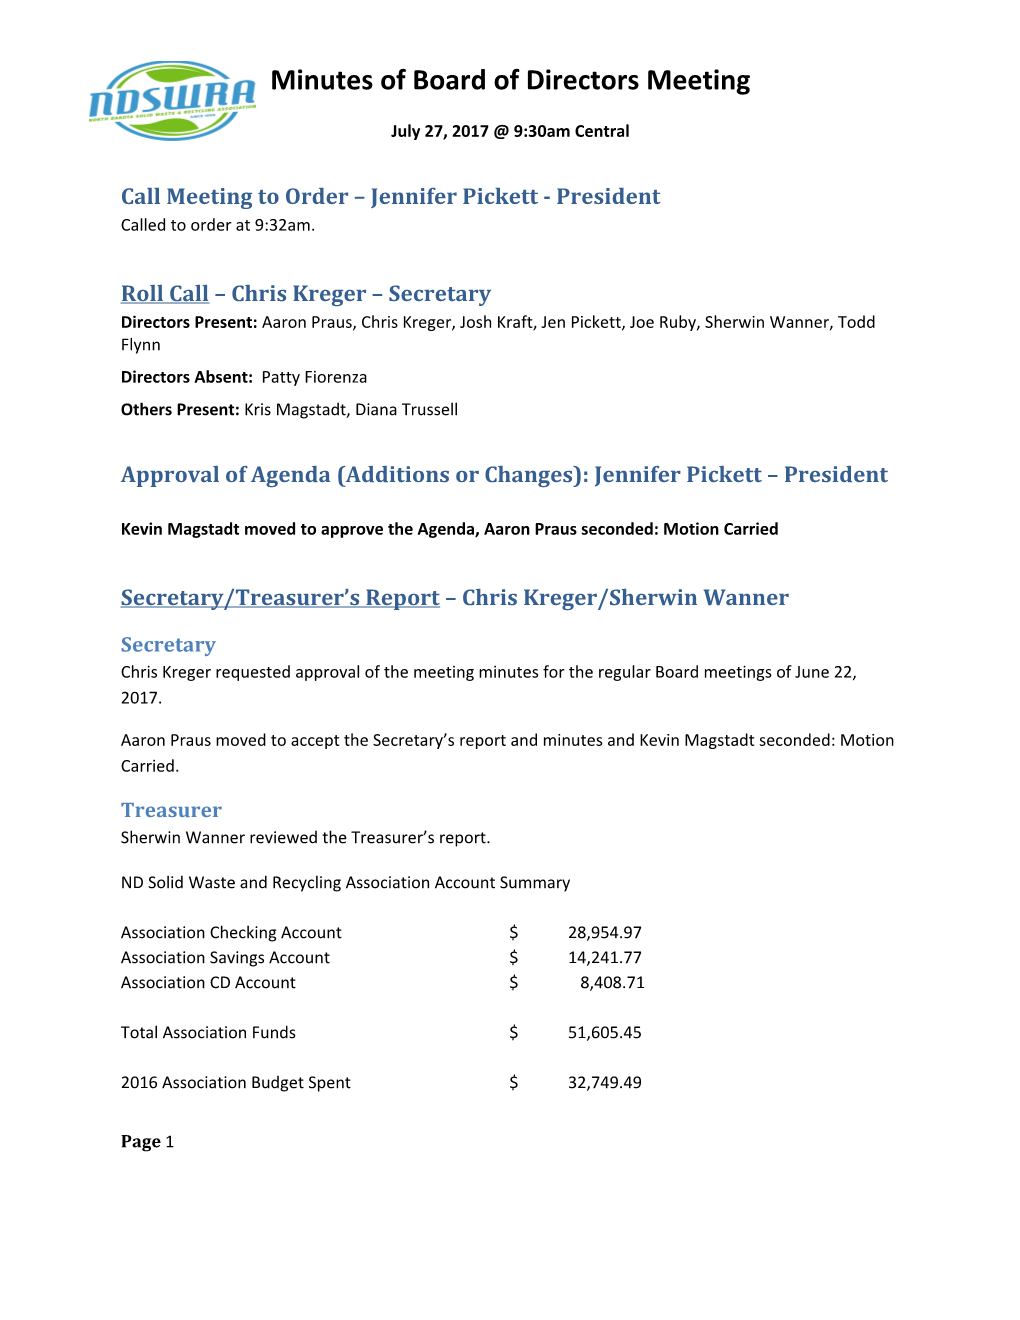 Call Meeting to Order Jennifer Pickett - President